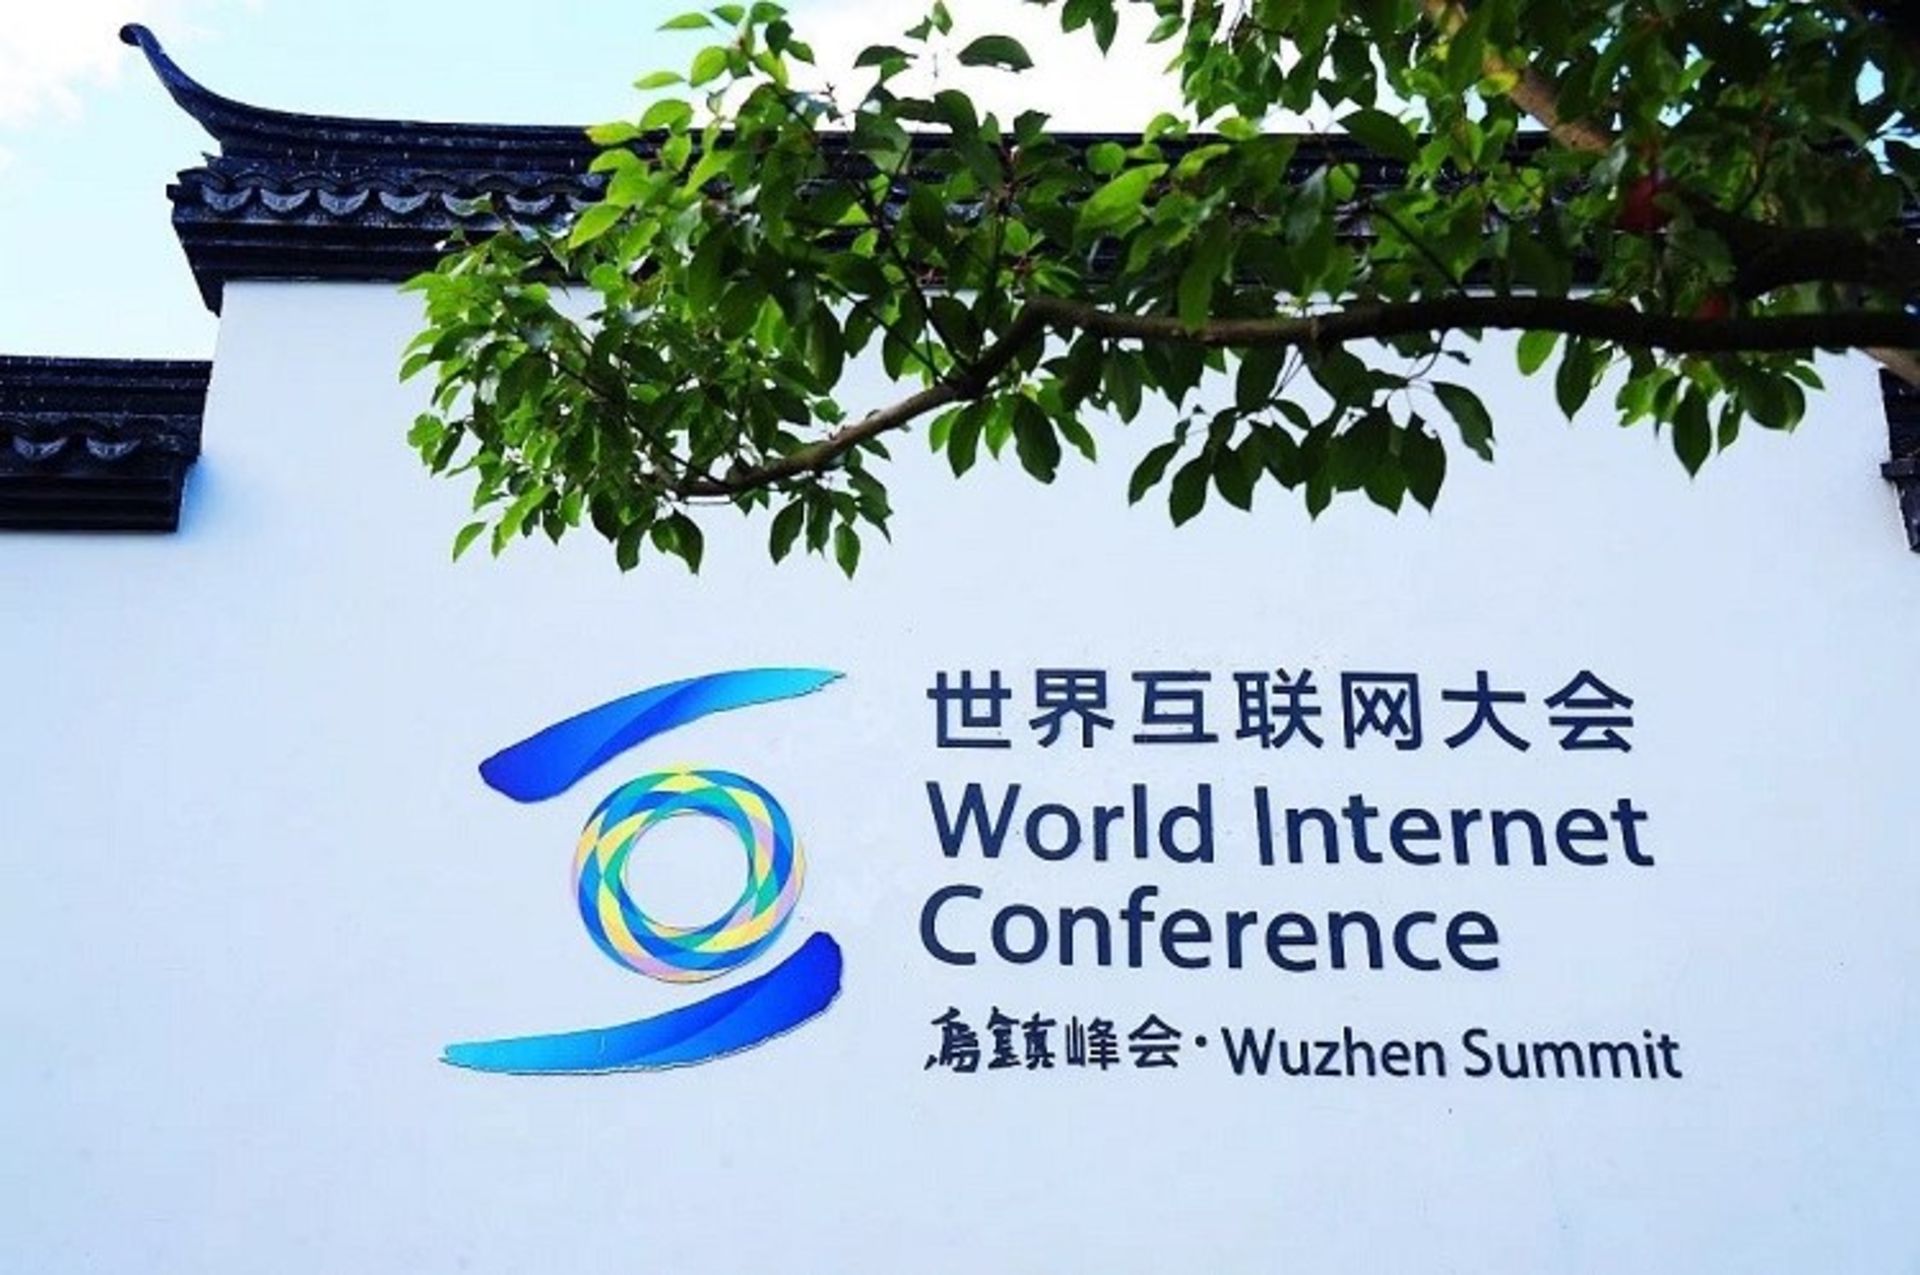 مرجع متخصصين ايران كنفرانس جهاني اينترنت / World Internet Conference